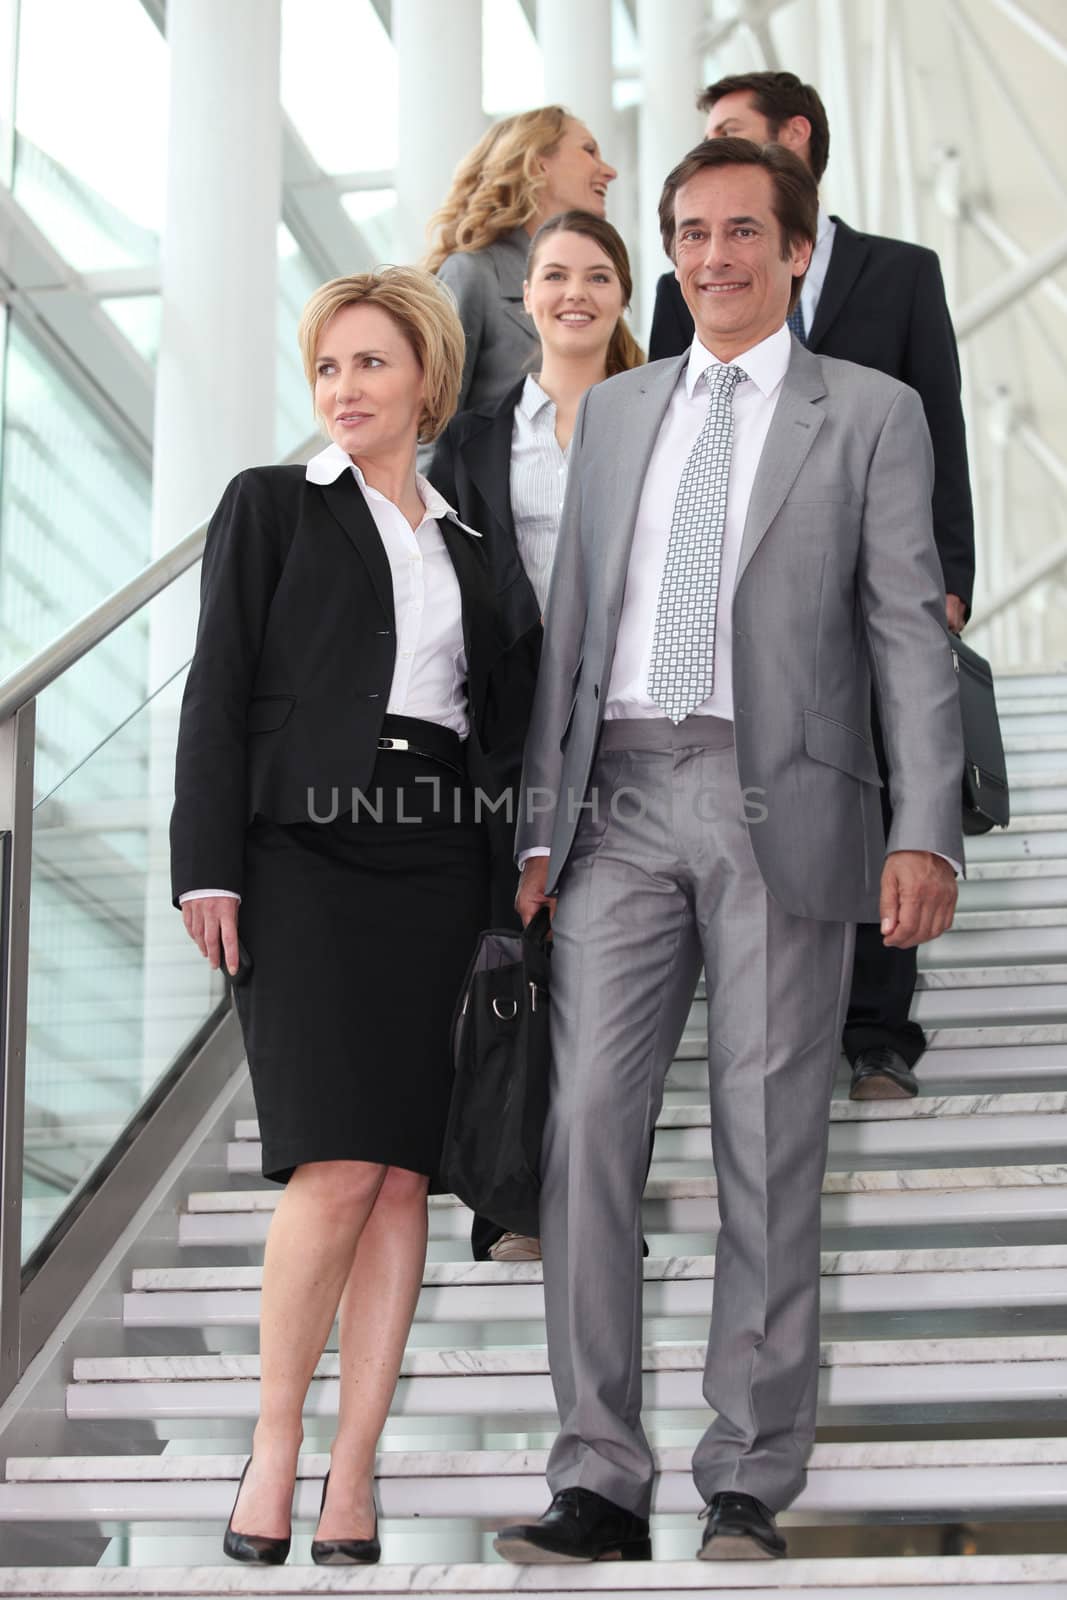 Business people walking down steps by phovoir